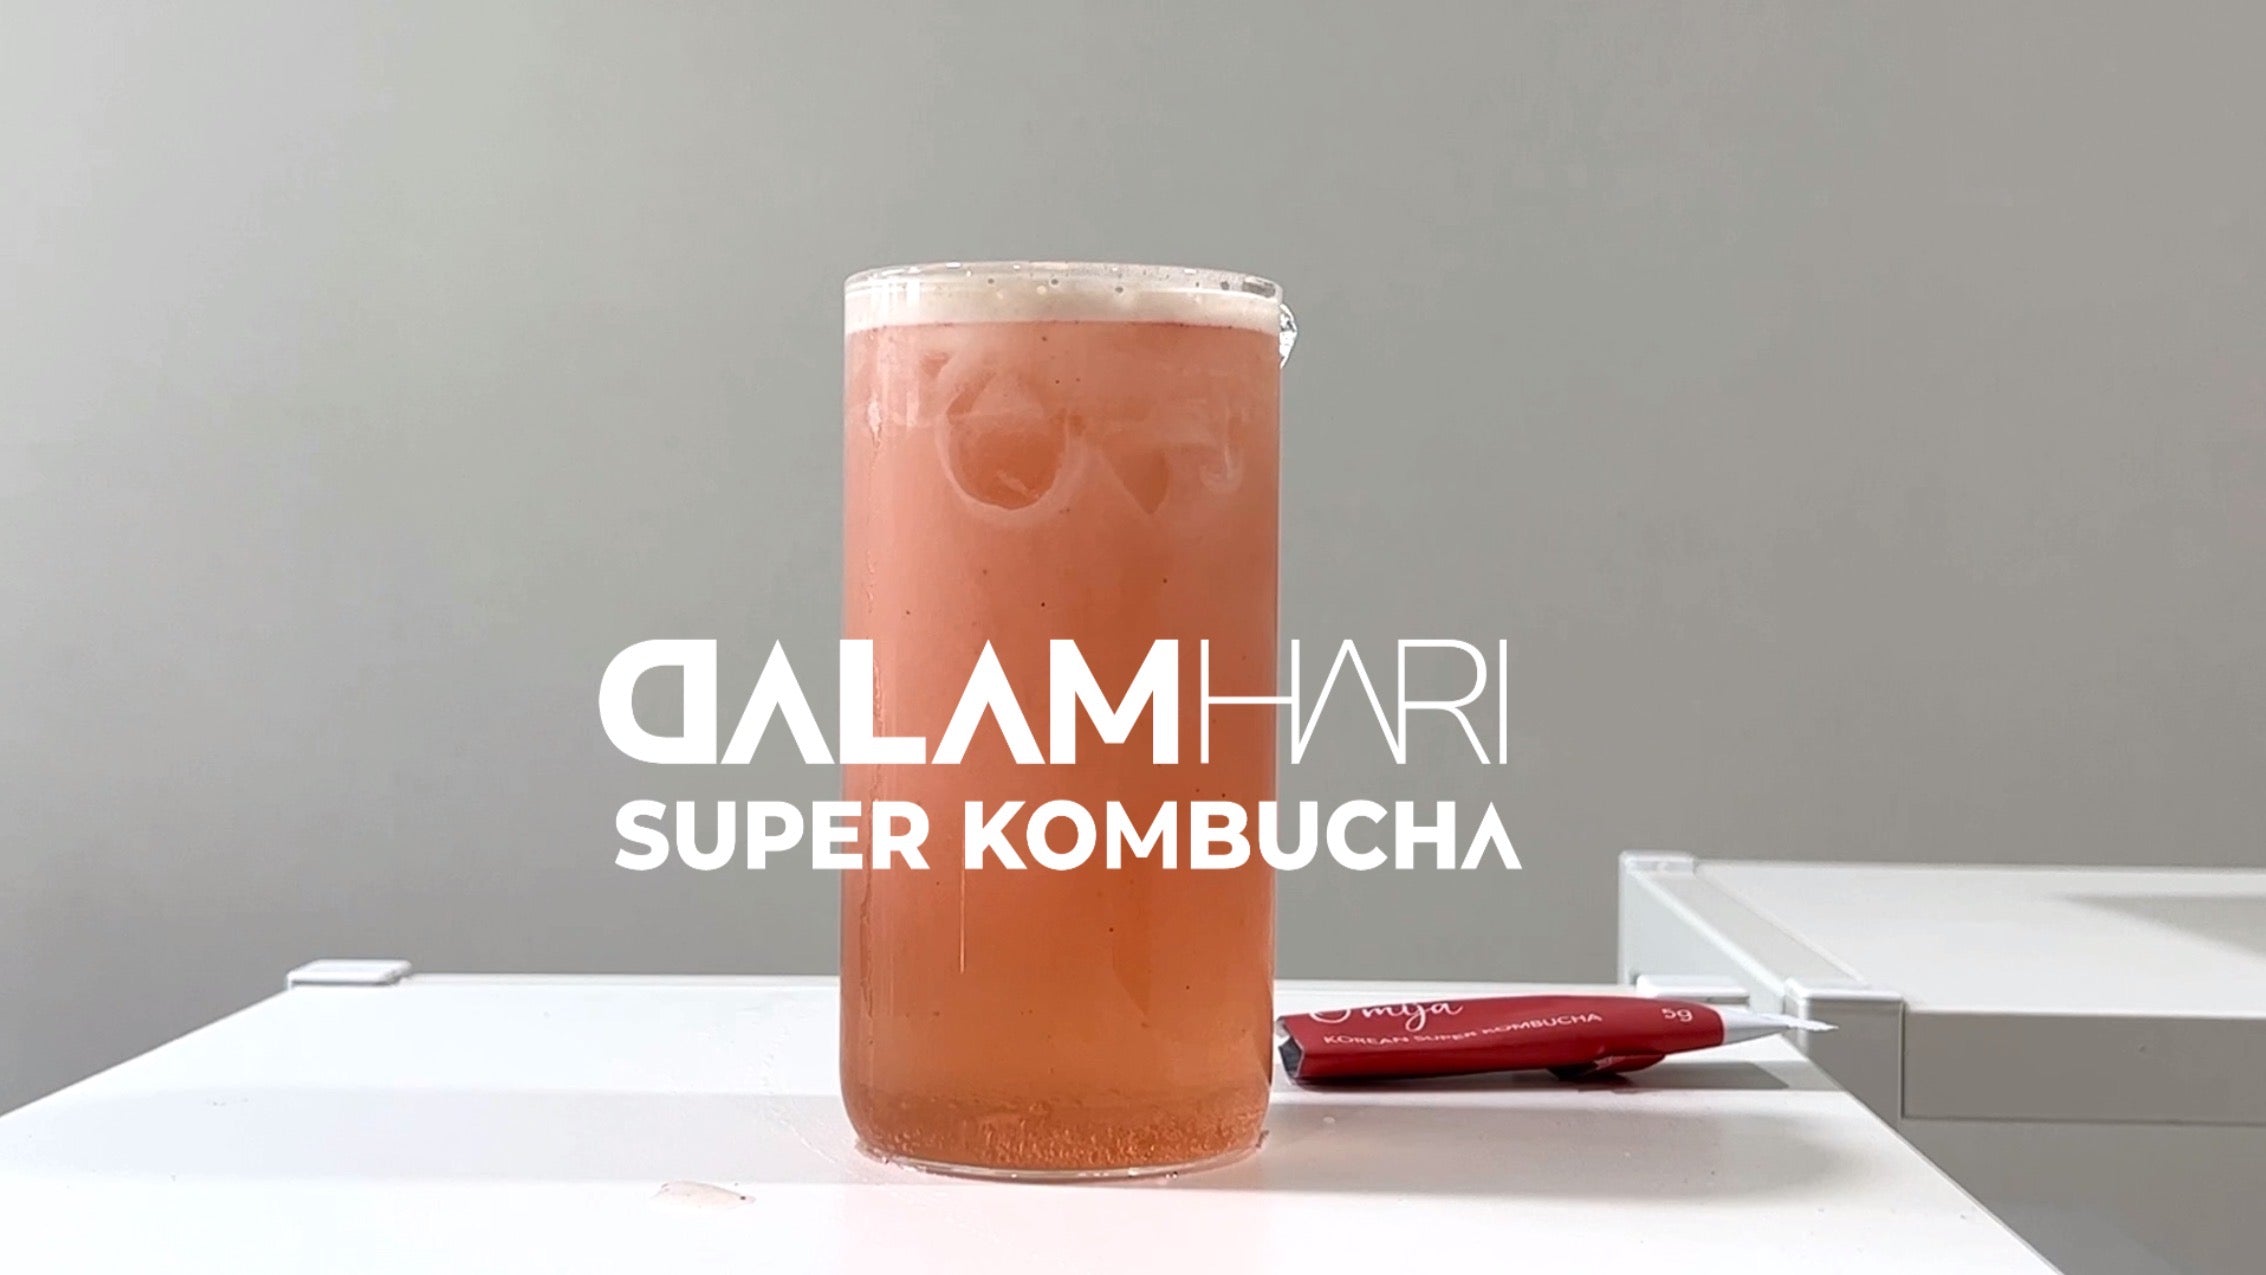 How to drink kombucha